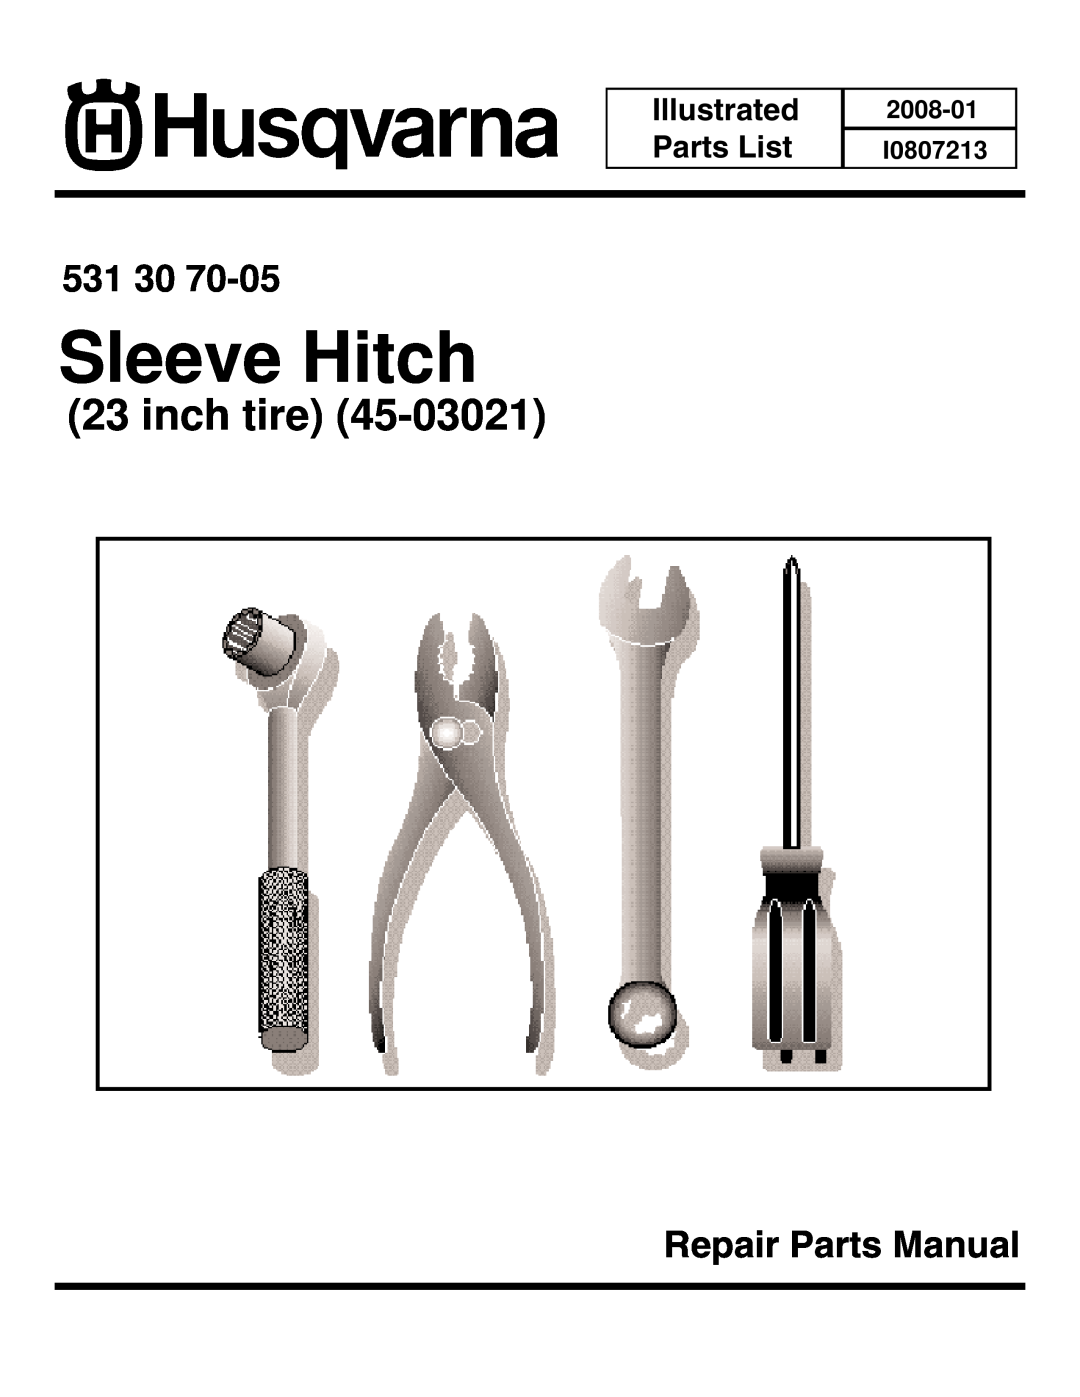 Husqvarna I0807213 manual Sleeve Hitch, inch tire, 531, Repair Parts Manual, Illustrated Parts List, 2008-01 